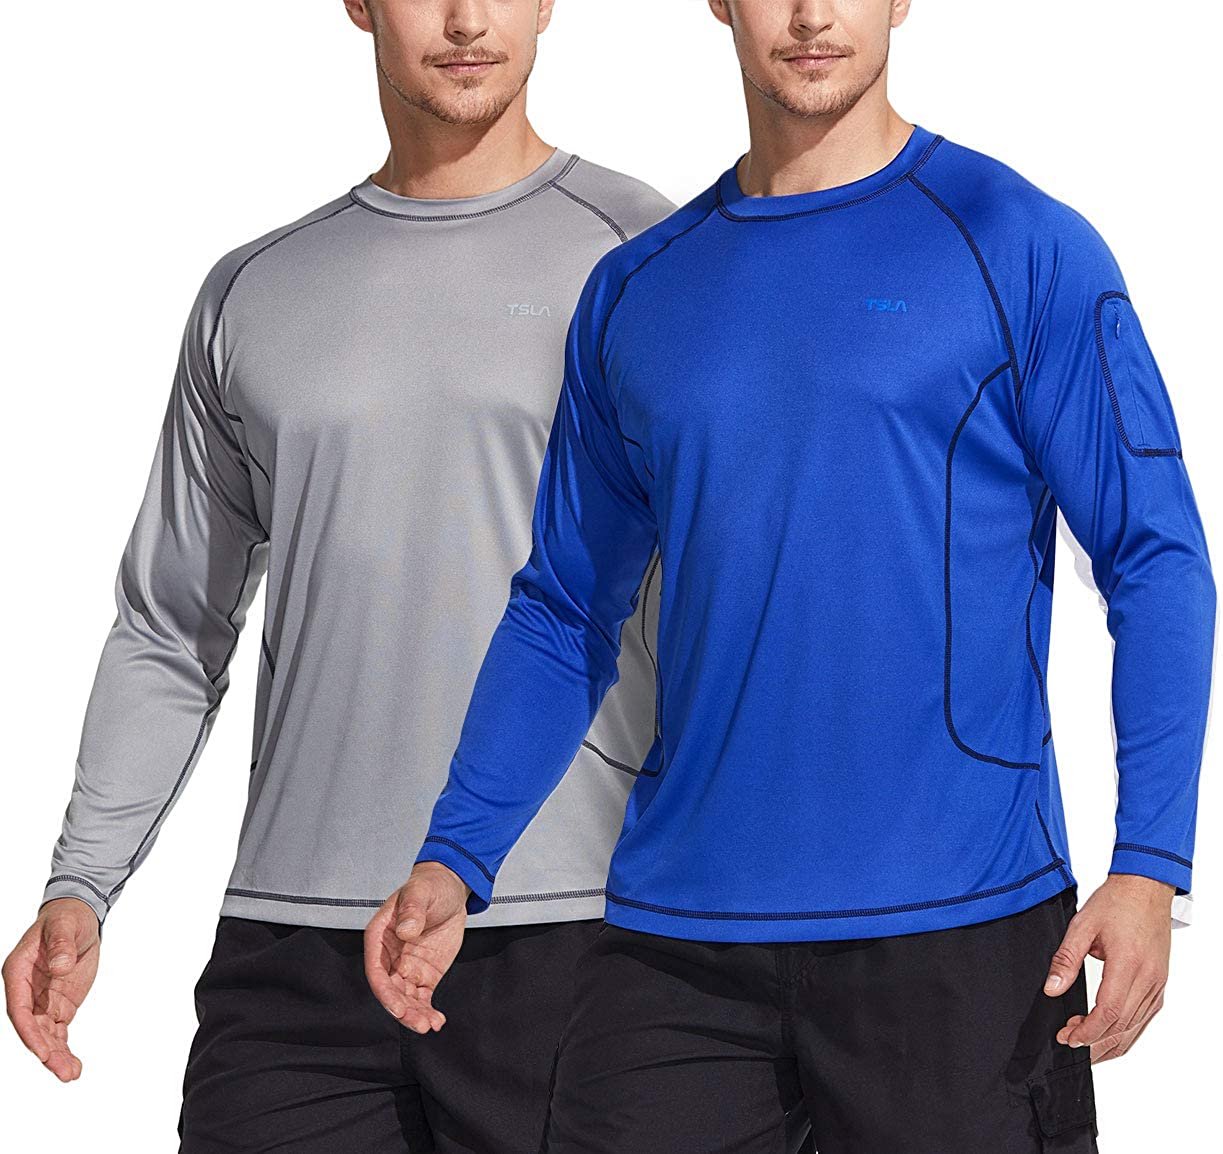 Details about   TSLA 1 or 2 Pack Men's Rashguard Swim Shirts Loose-Fit Long Sleeve Shir UPF 50 